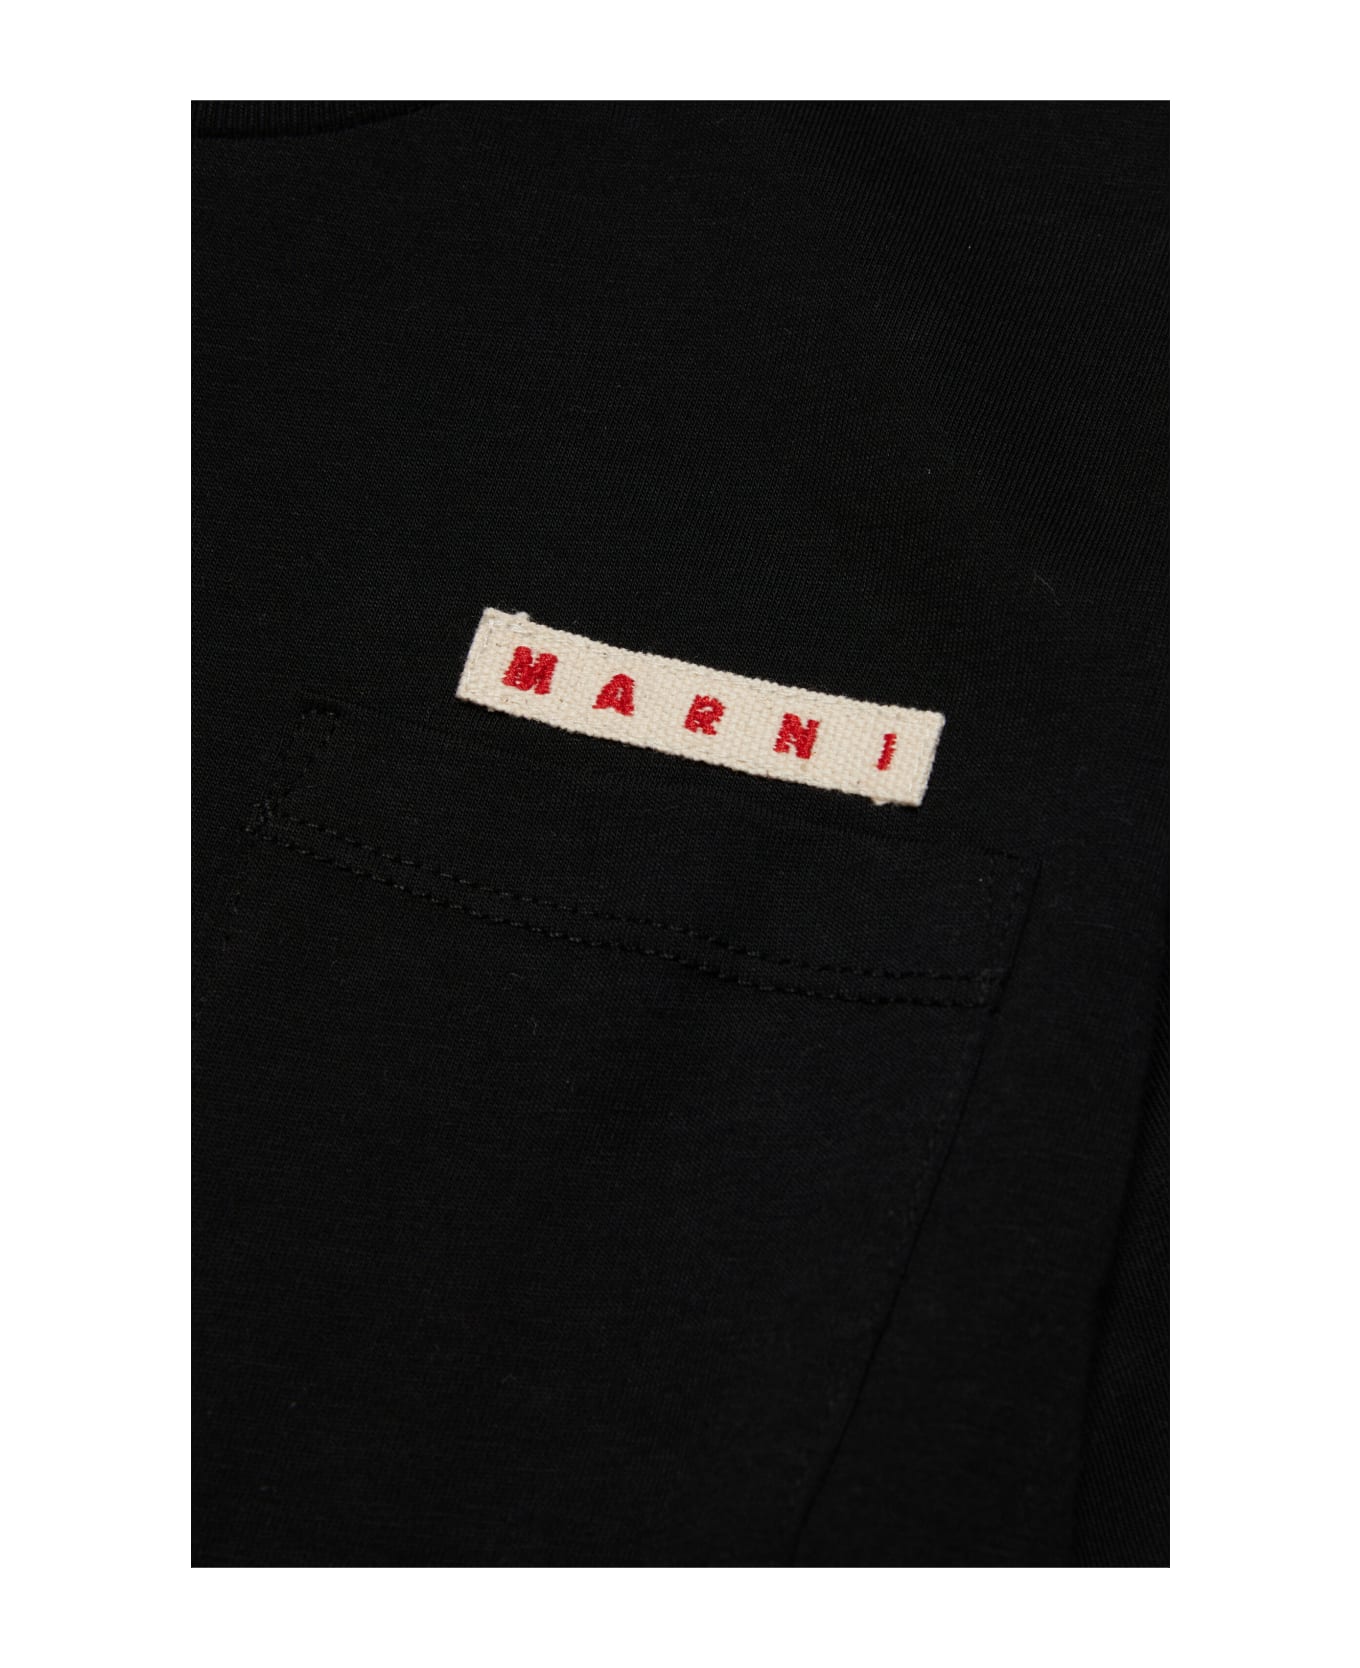 Marni Mt171u T-shirt Marni T-shirt With Pocket And Logo